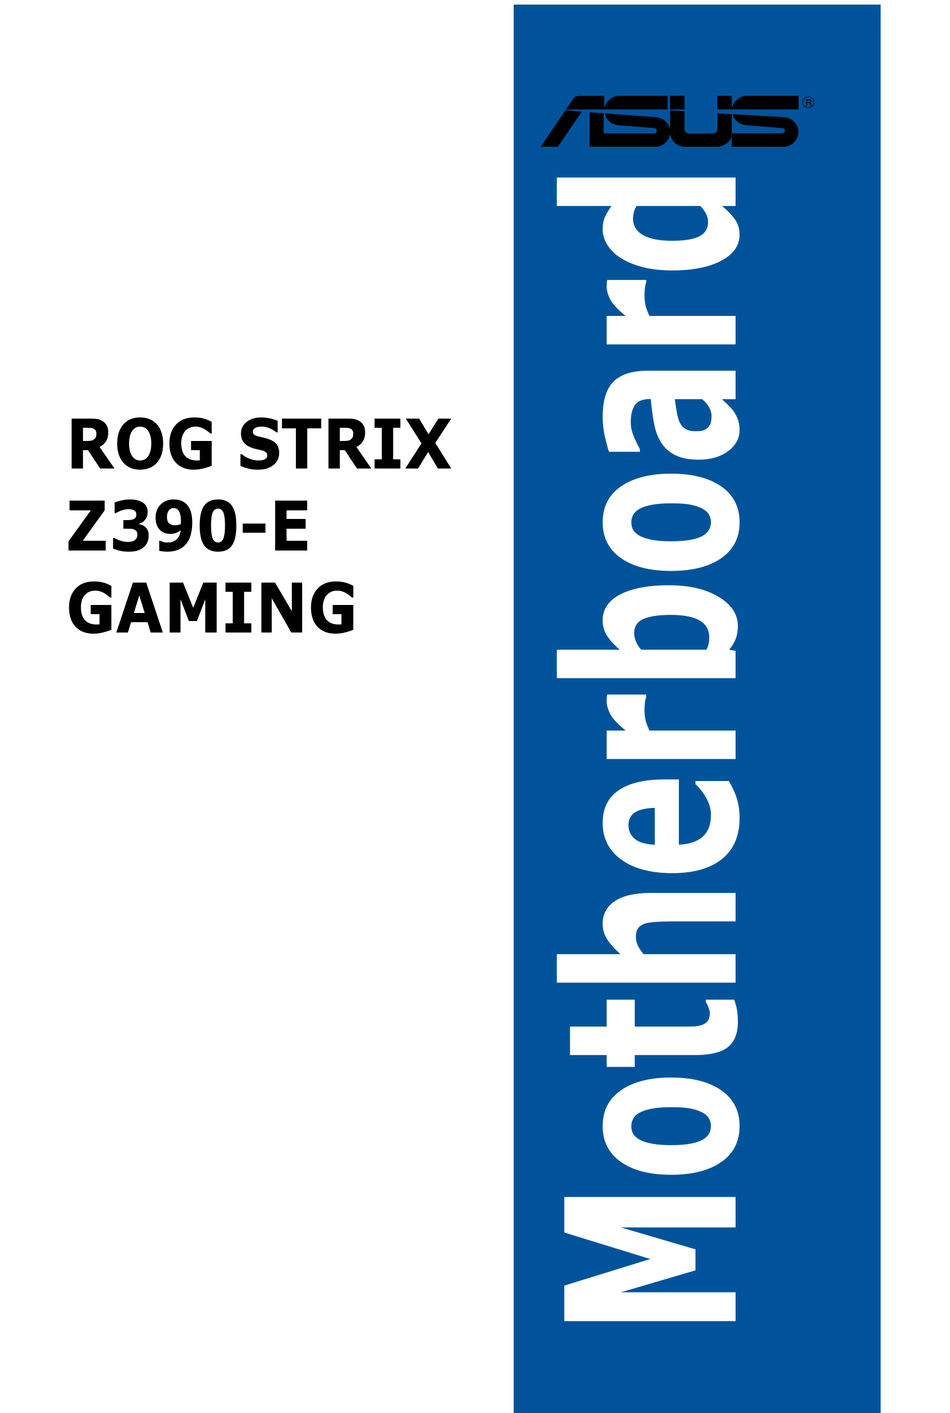 Asus Rog Strix Z390 E Gaming Motherboard Manual Manualslib